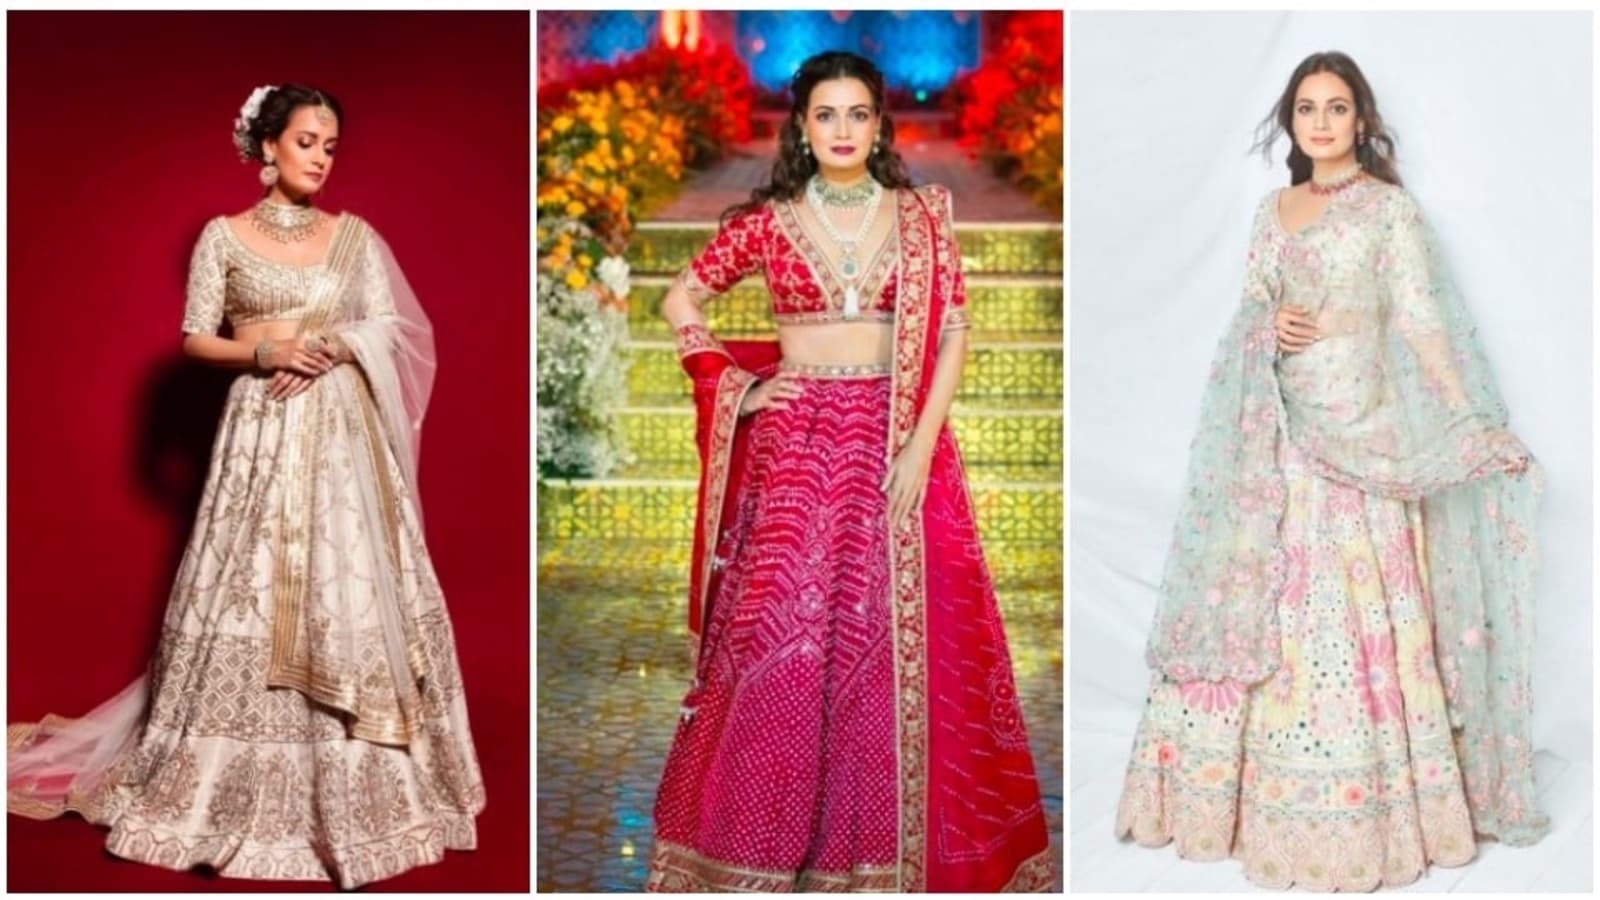 Happy Diwali: Dia Mirza looks glamourous in sheer silver saree, Nargis  Fakhri sparks elegance in pastel embellished lehenga | IWMBuzz